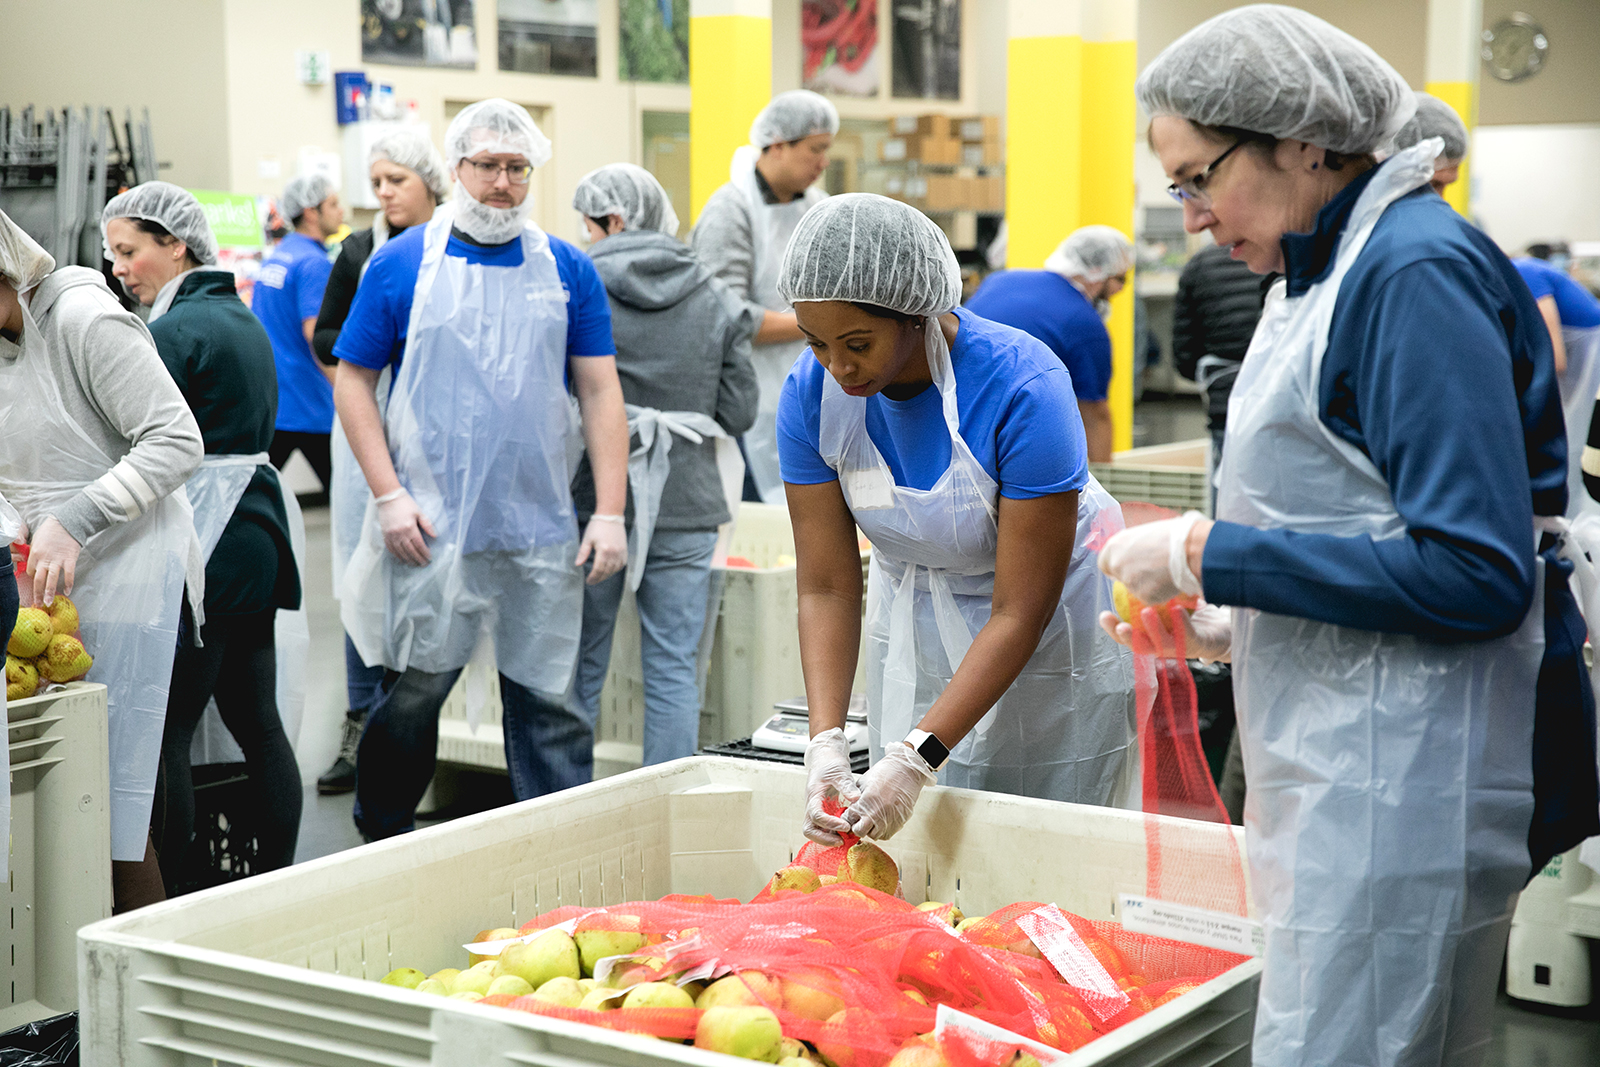 Volunteers working at the Oregon Food Bank